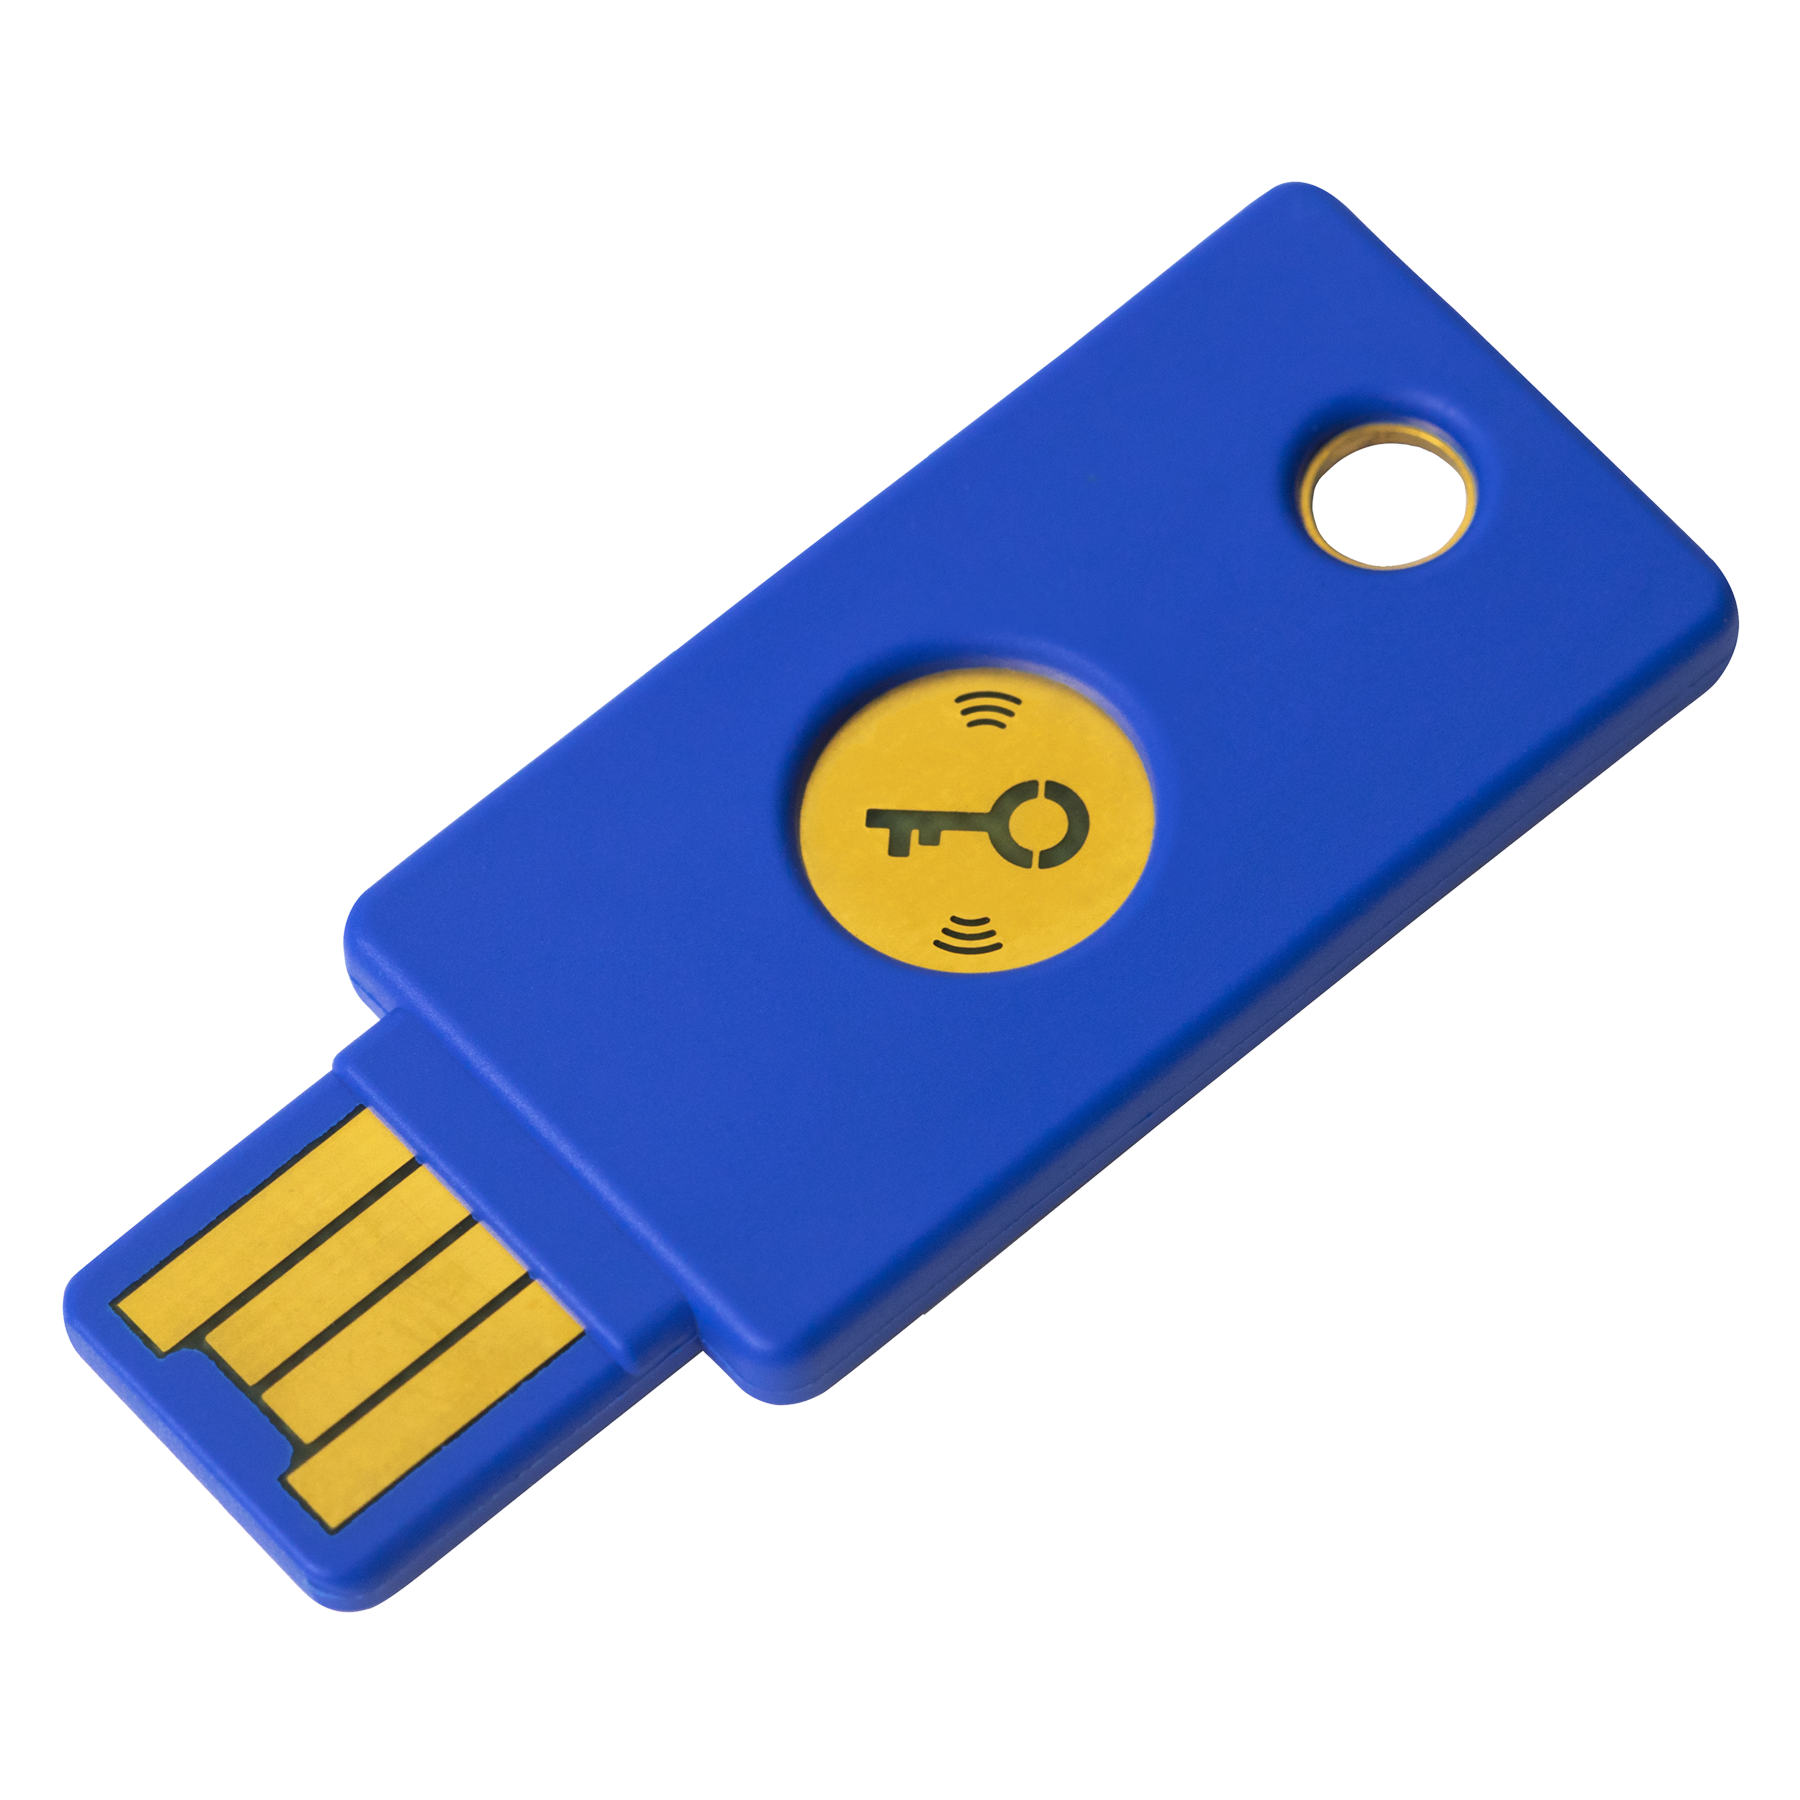 Security Key by Yubico (NFC)